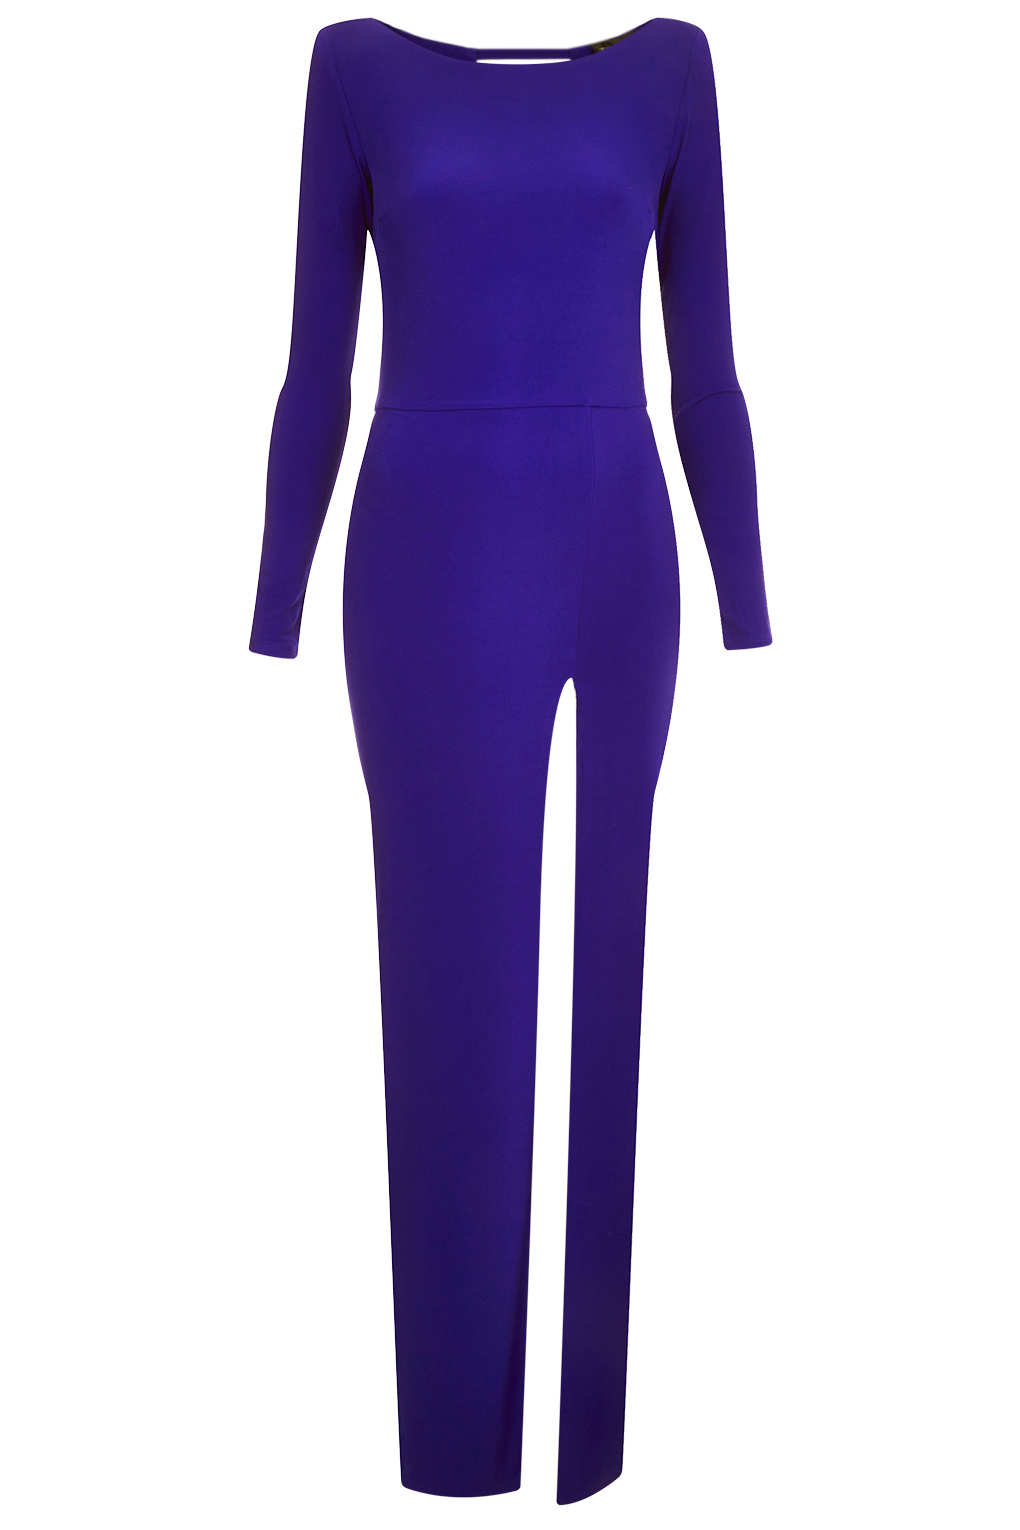 Lyst - Topshop Shoulder Pad Maxi Dress in Purple